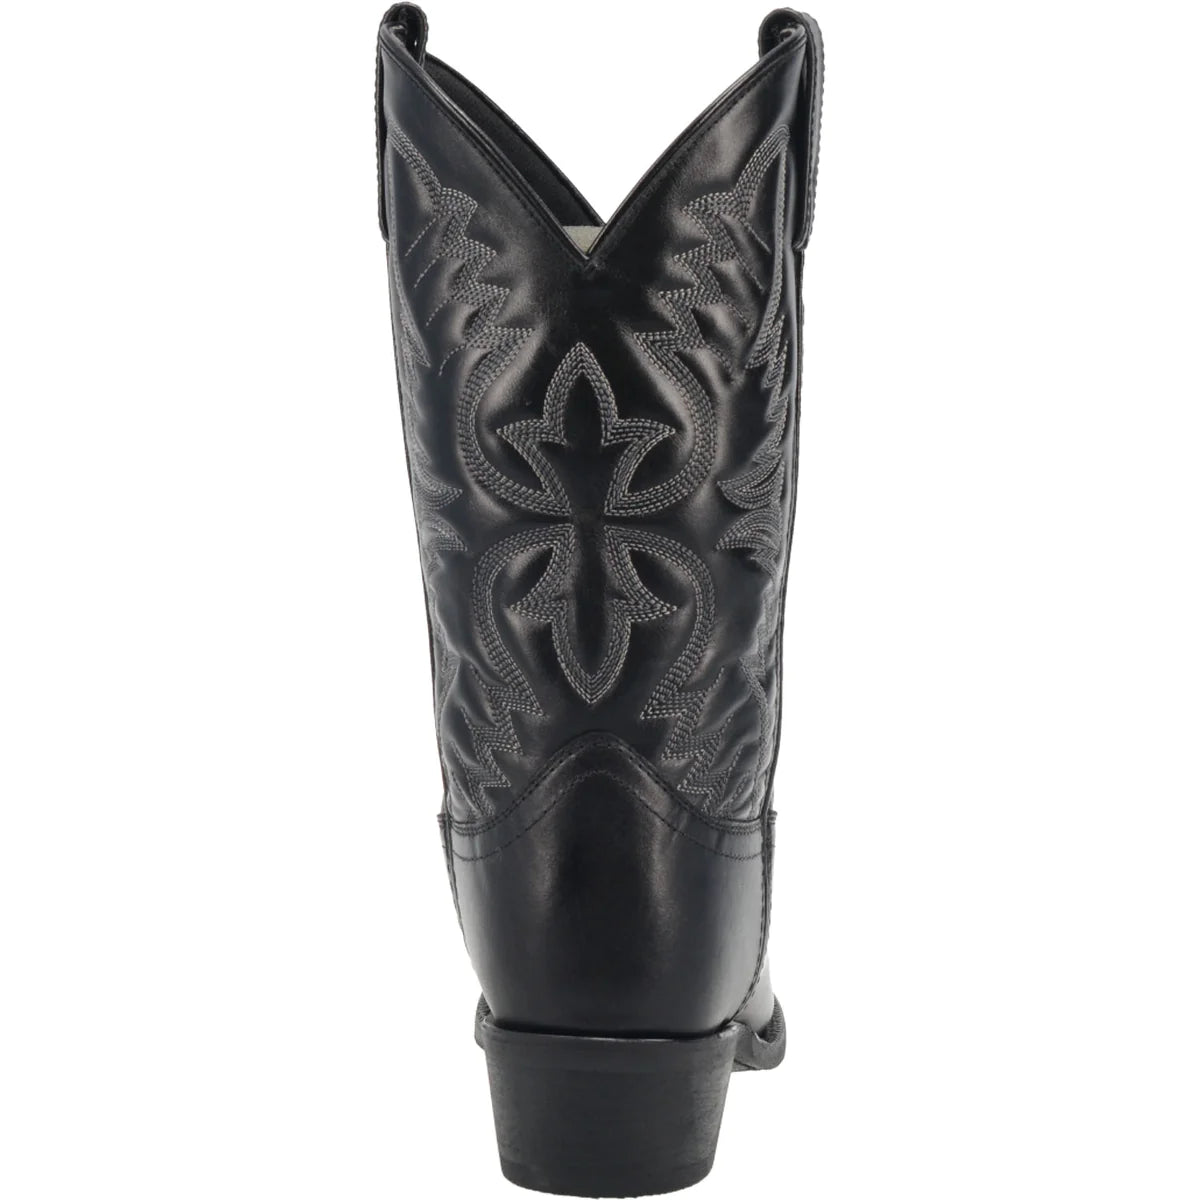 Laredo Men’s Birchwood Black Leather Boots